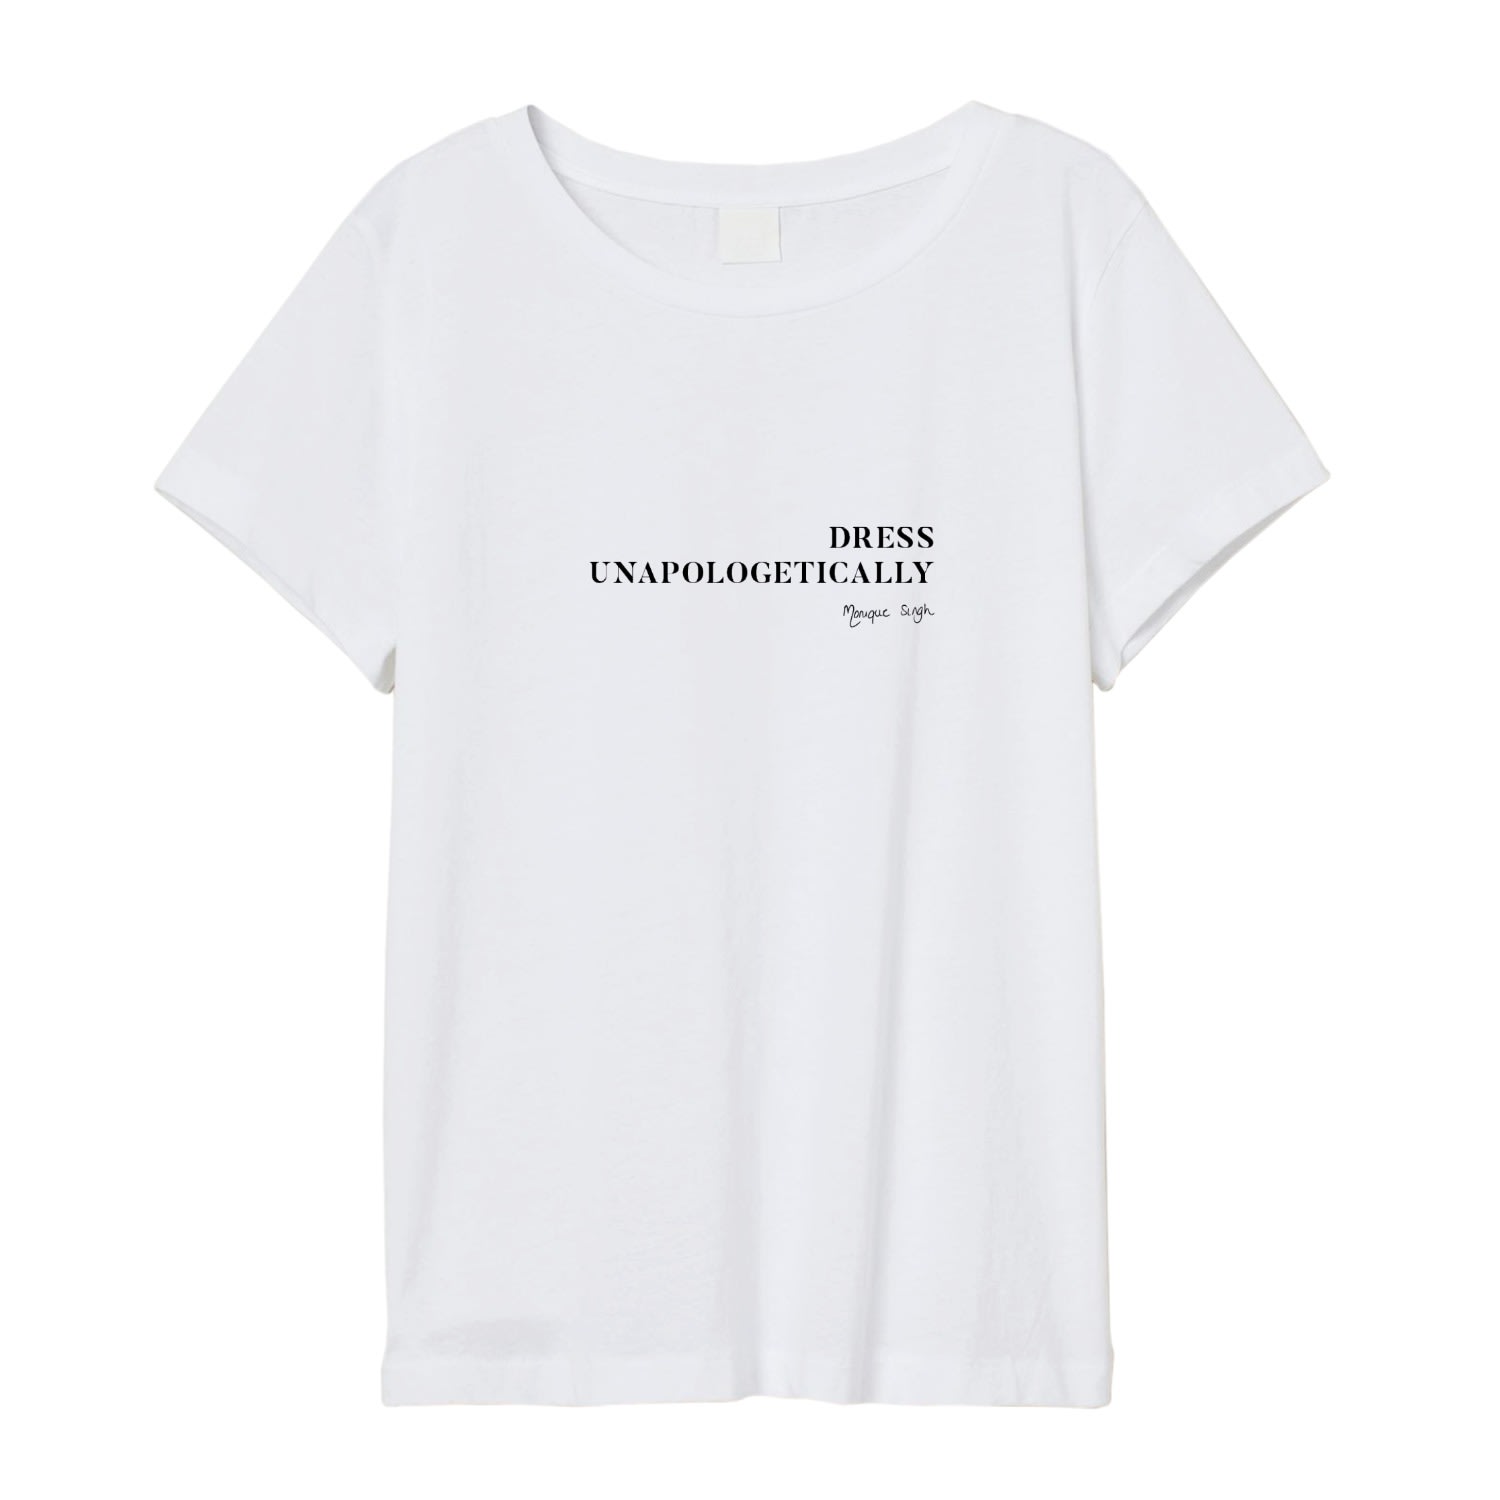 Women’s White Dress Unapologetically Tee T-Shirt 3Xl Monique Singh